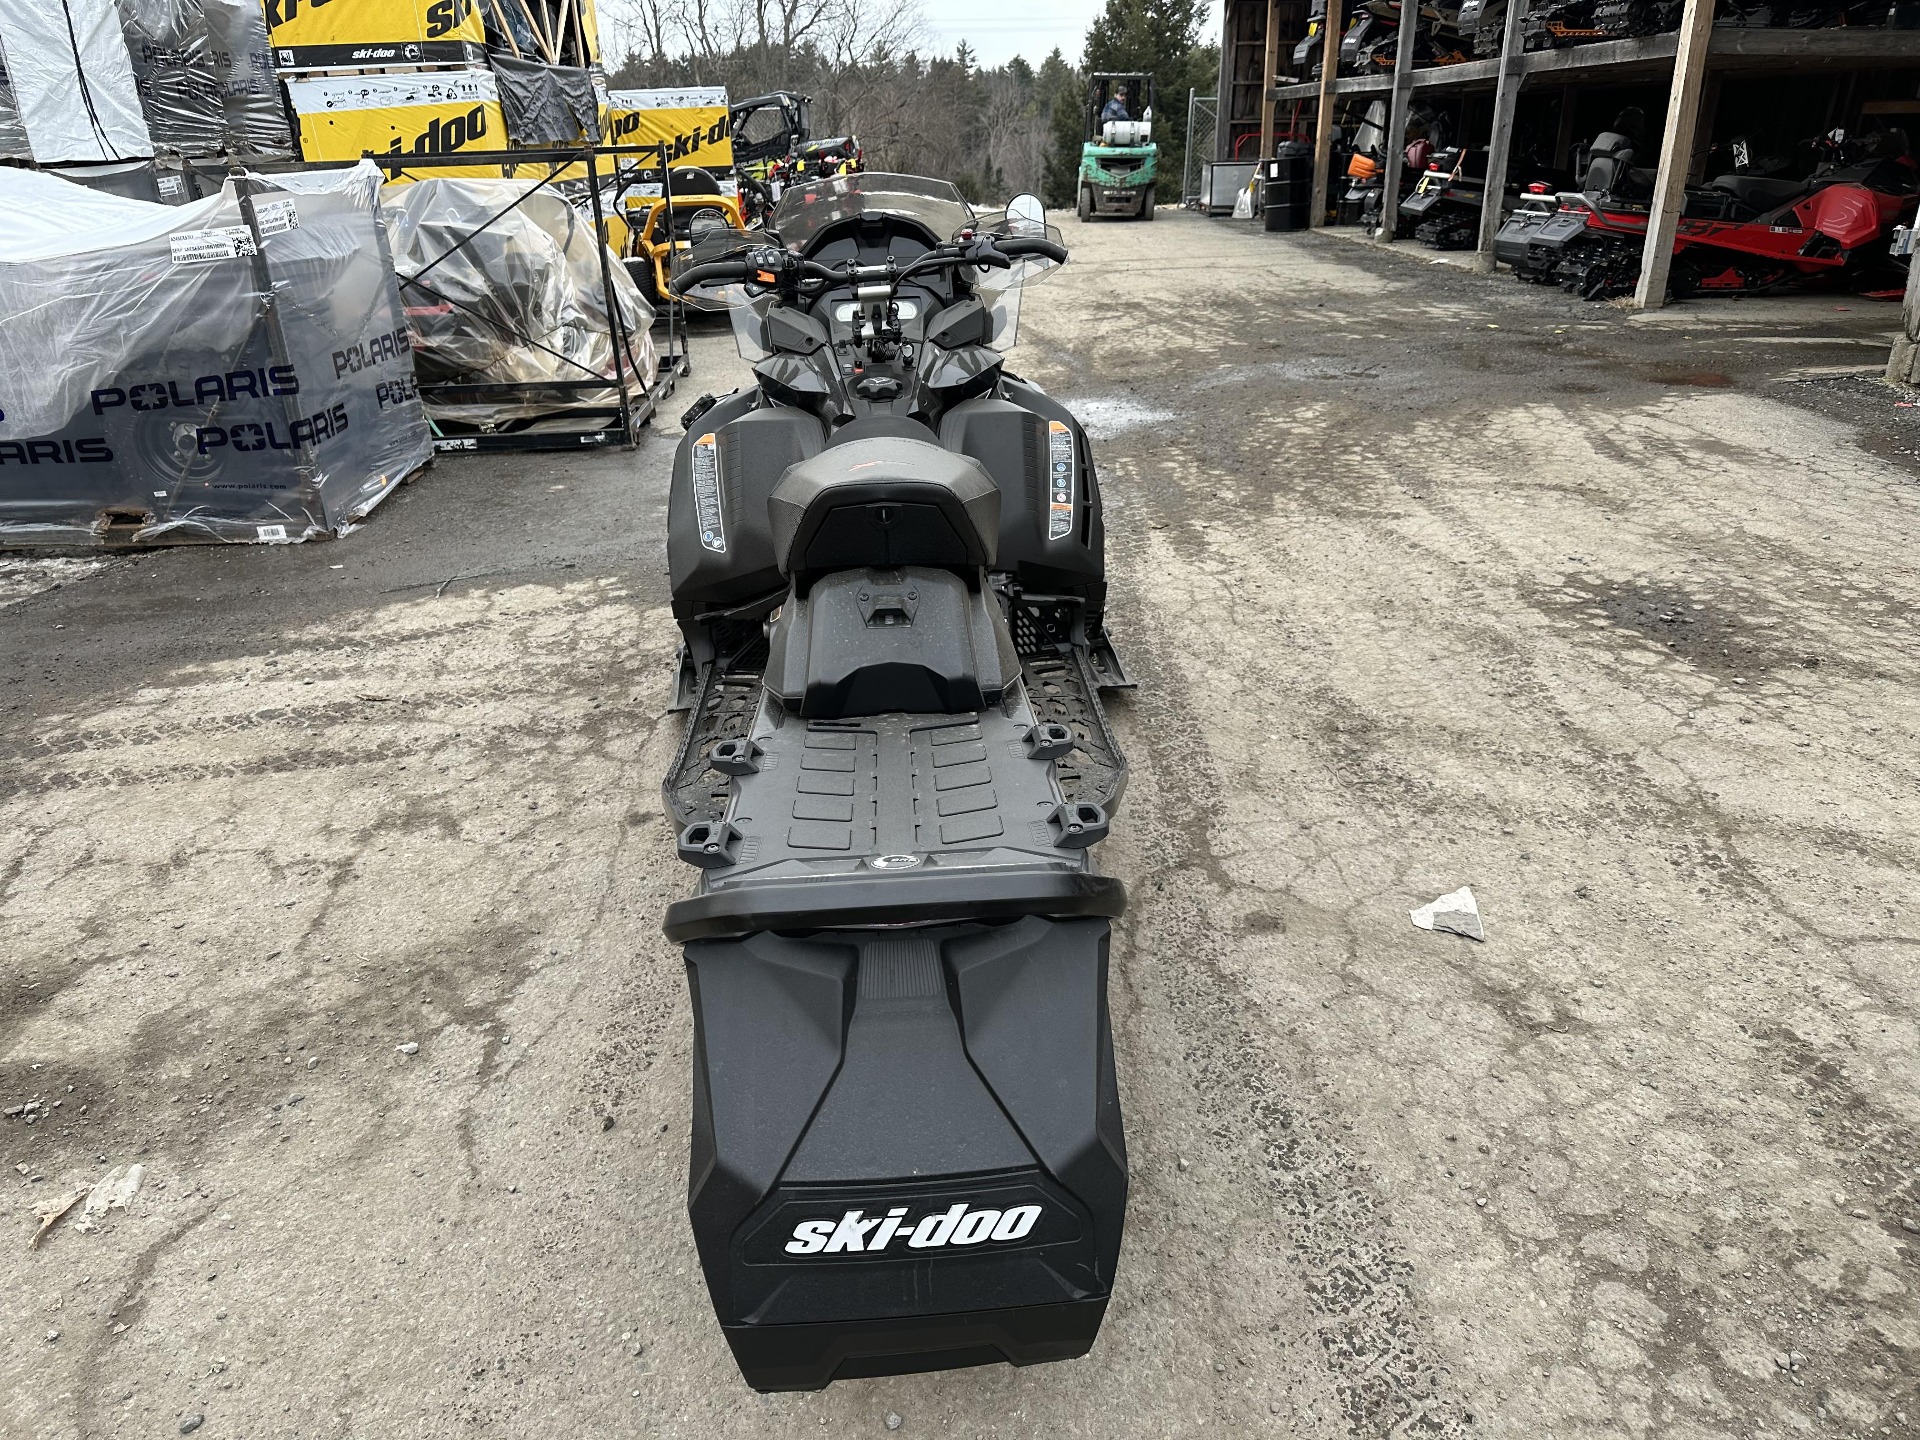 2022 Ski-Doo Renegade X-RS 900 ACE Turbo R ES w/ Smart-Shox, RipSaw 1.25 in Unity, Maine - Photo 5